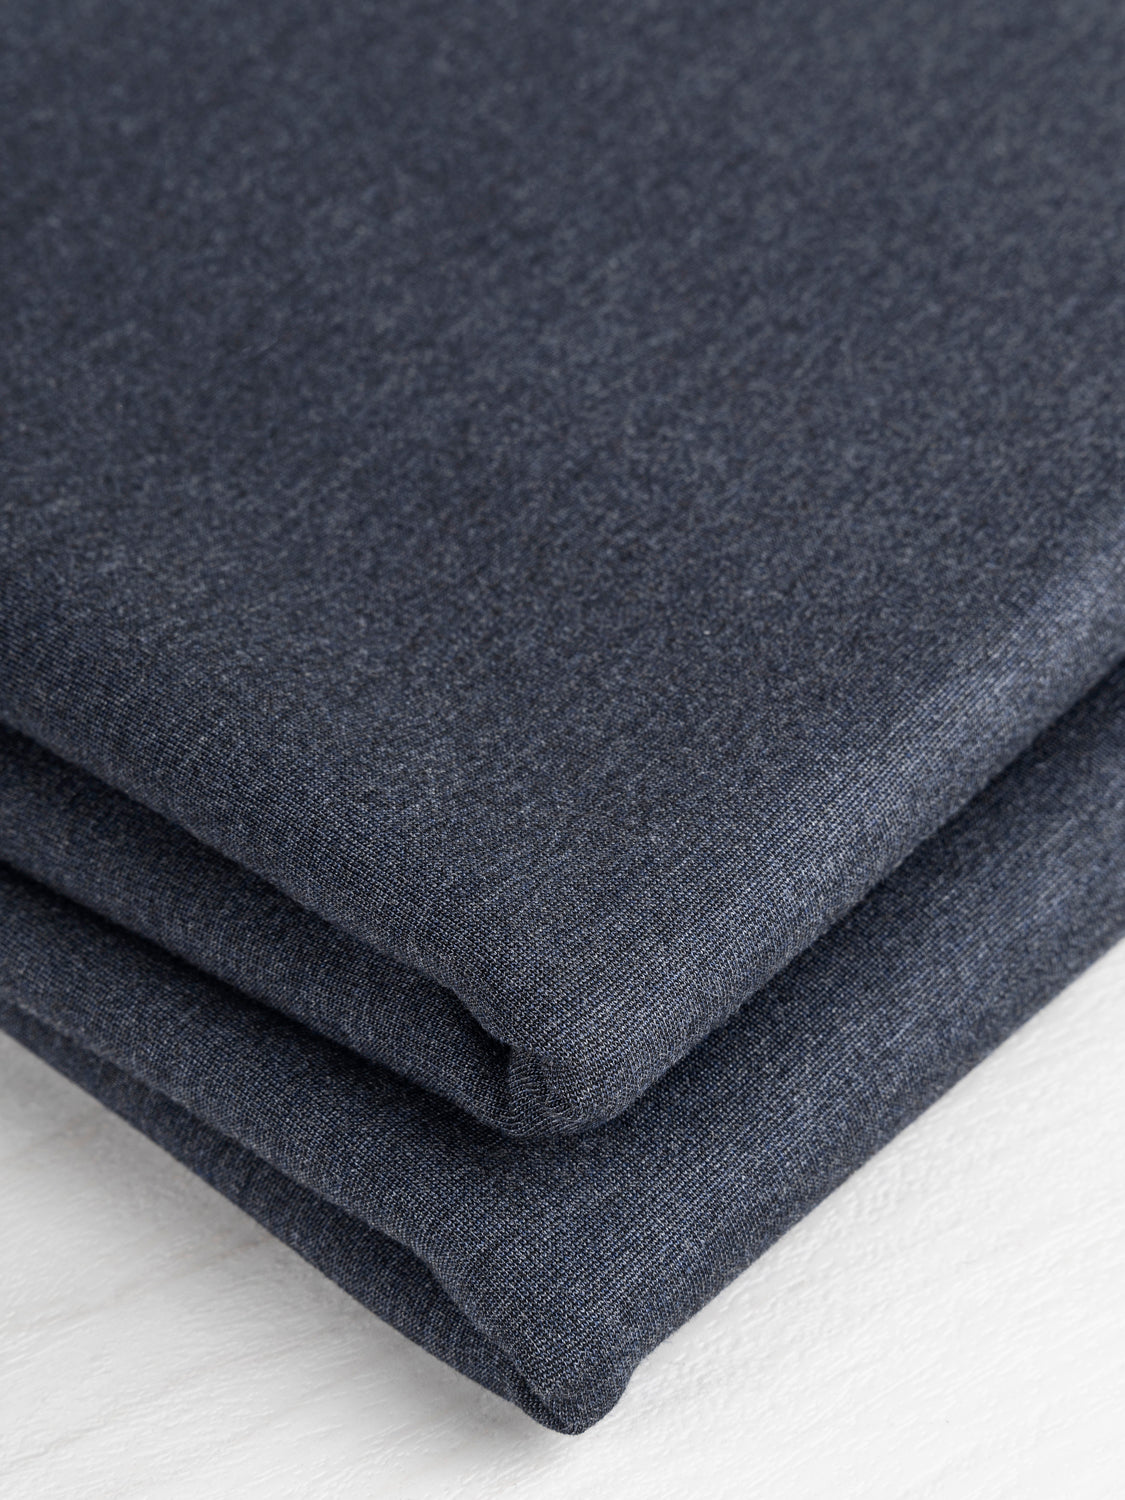 Dark Magenta Solid Cotton Spandex Knit Fabric